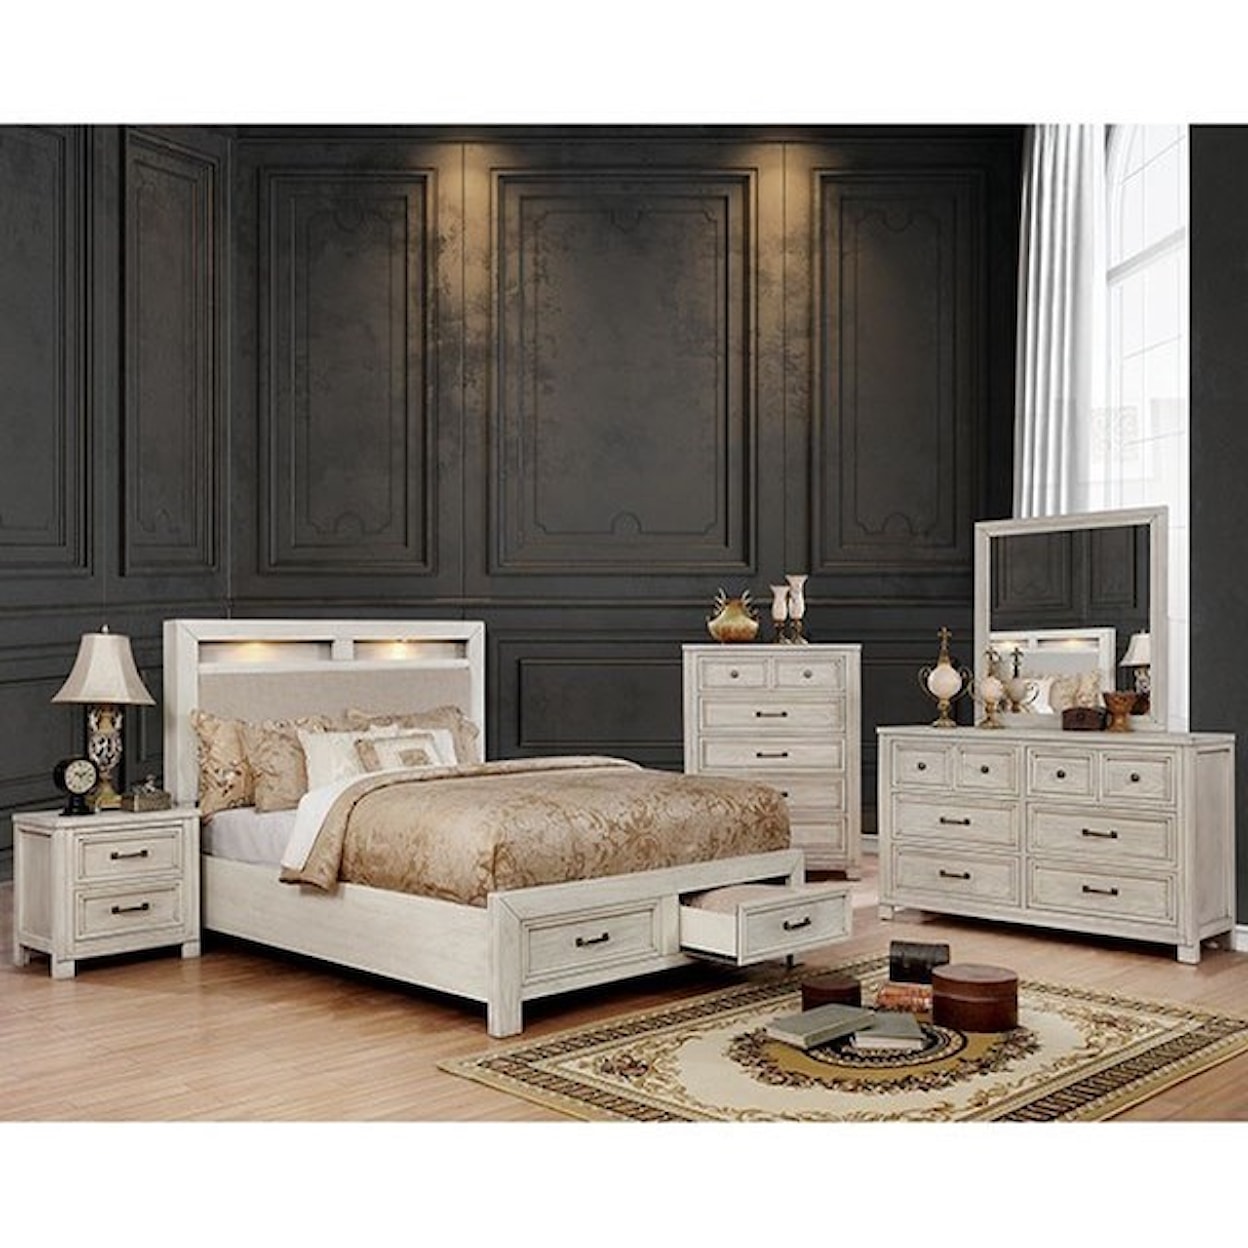 Furniture of America Tywyn Queen Storage Bed